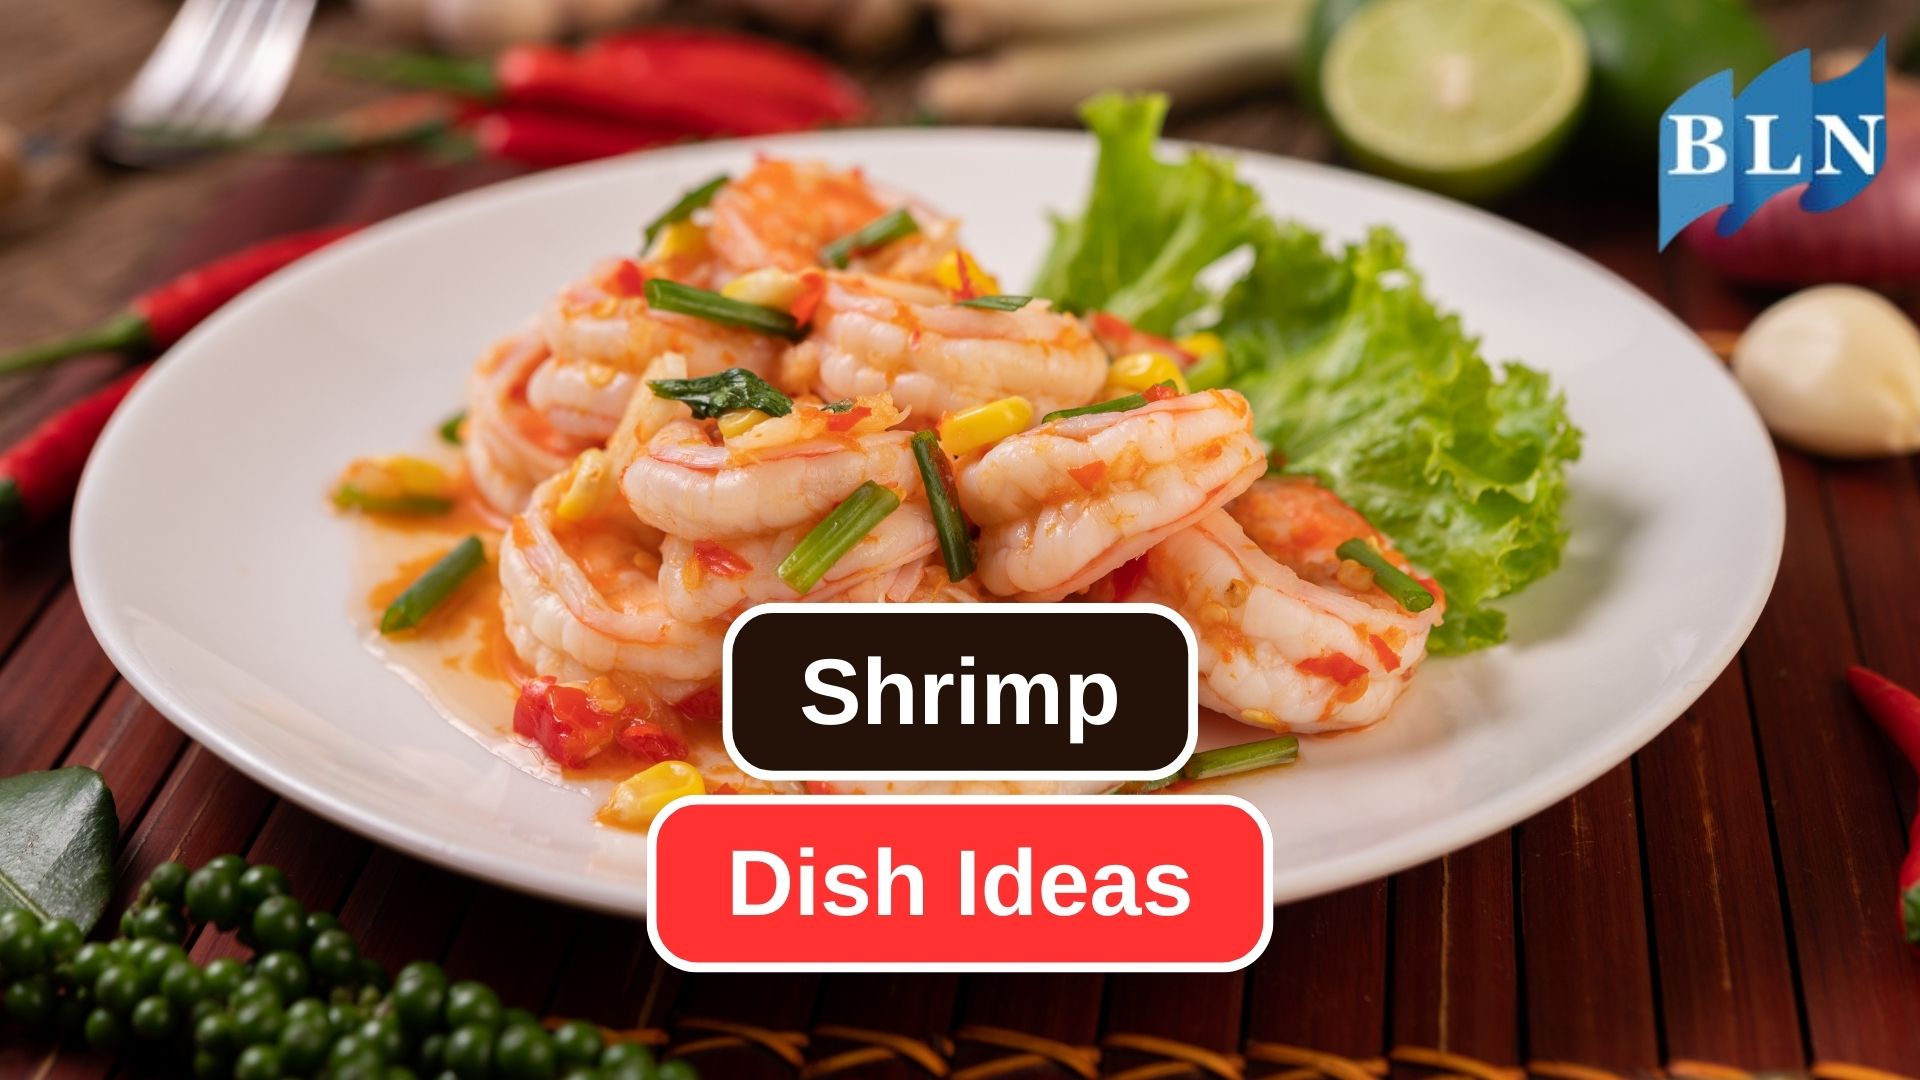 Here are 11 Dish Ideas Using Shrimp  